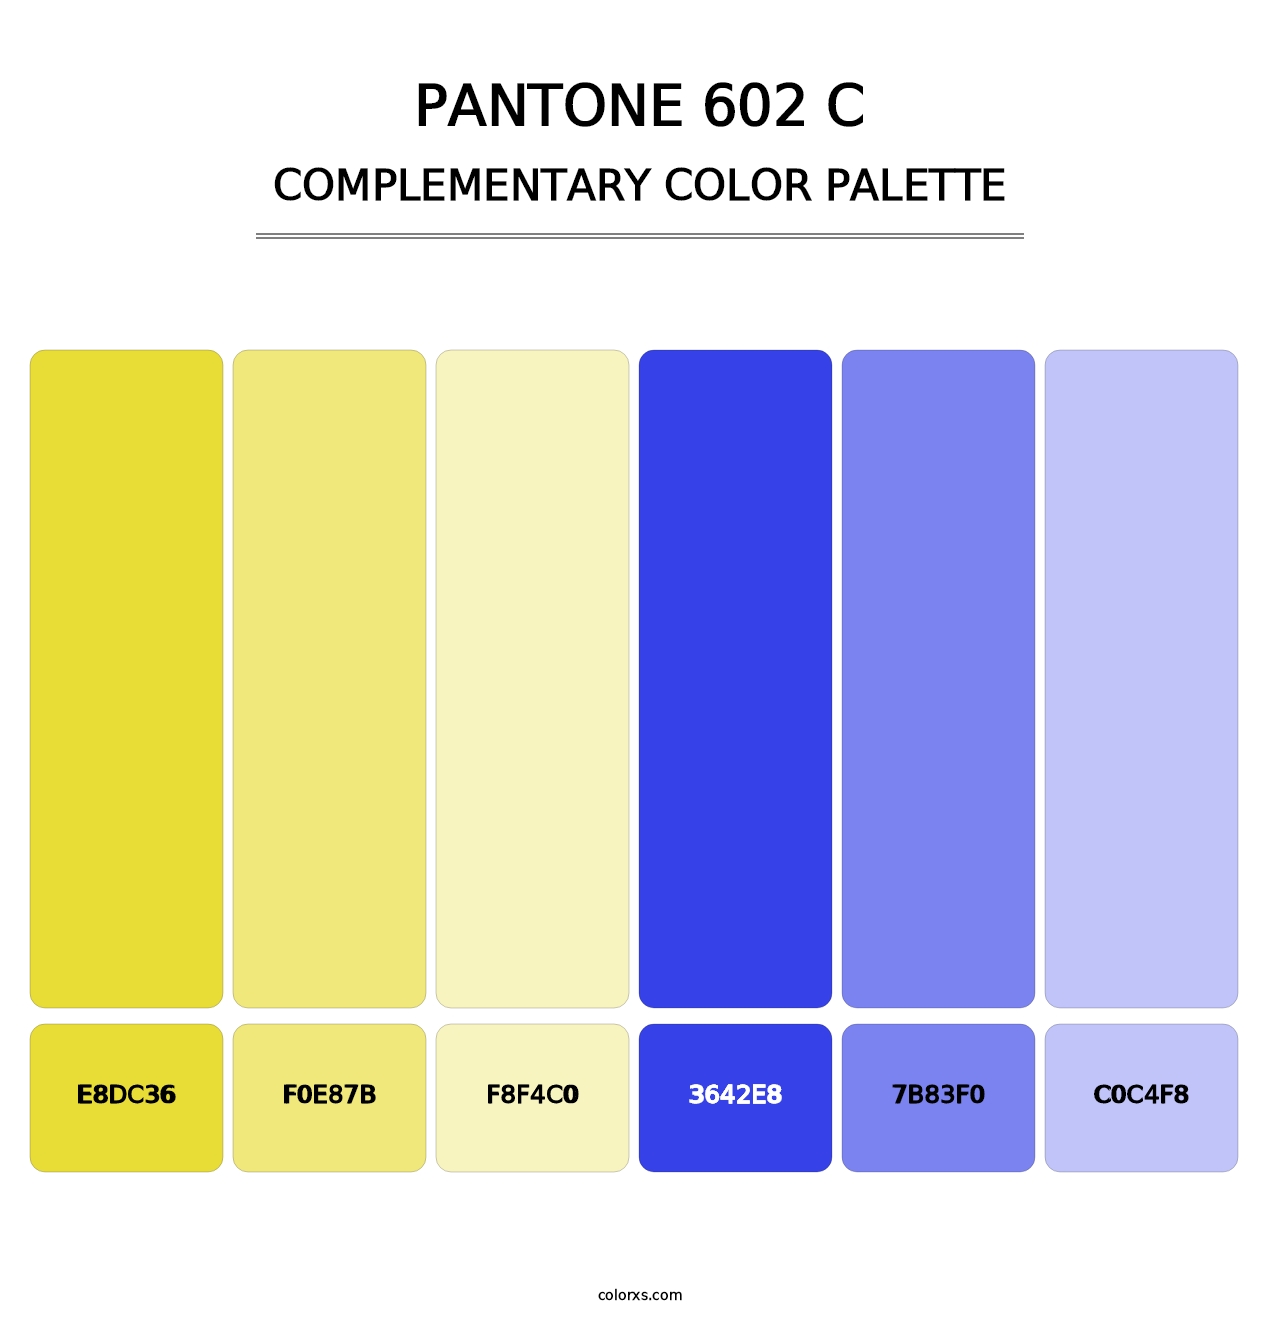 PANTONE 602 C - Complementary Color Palette